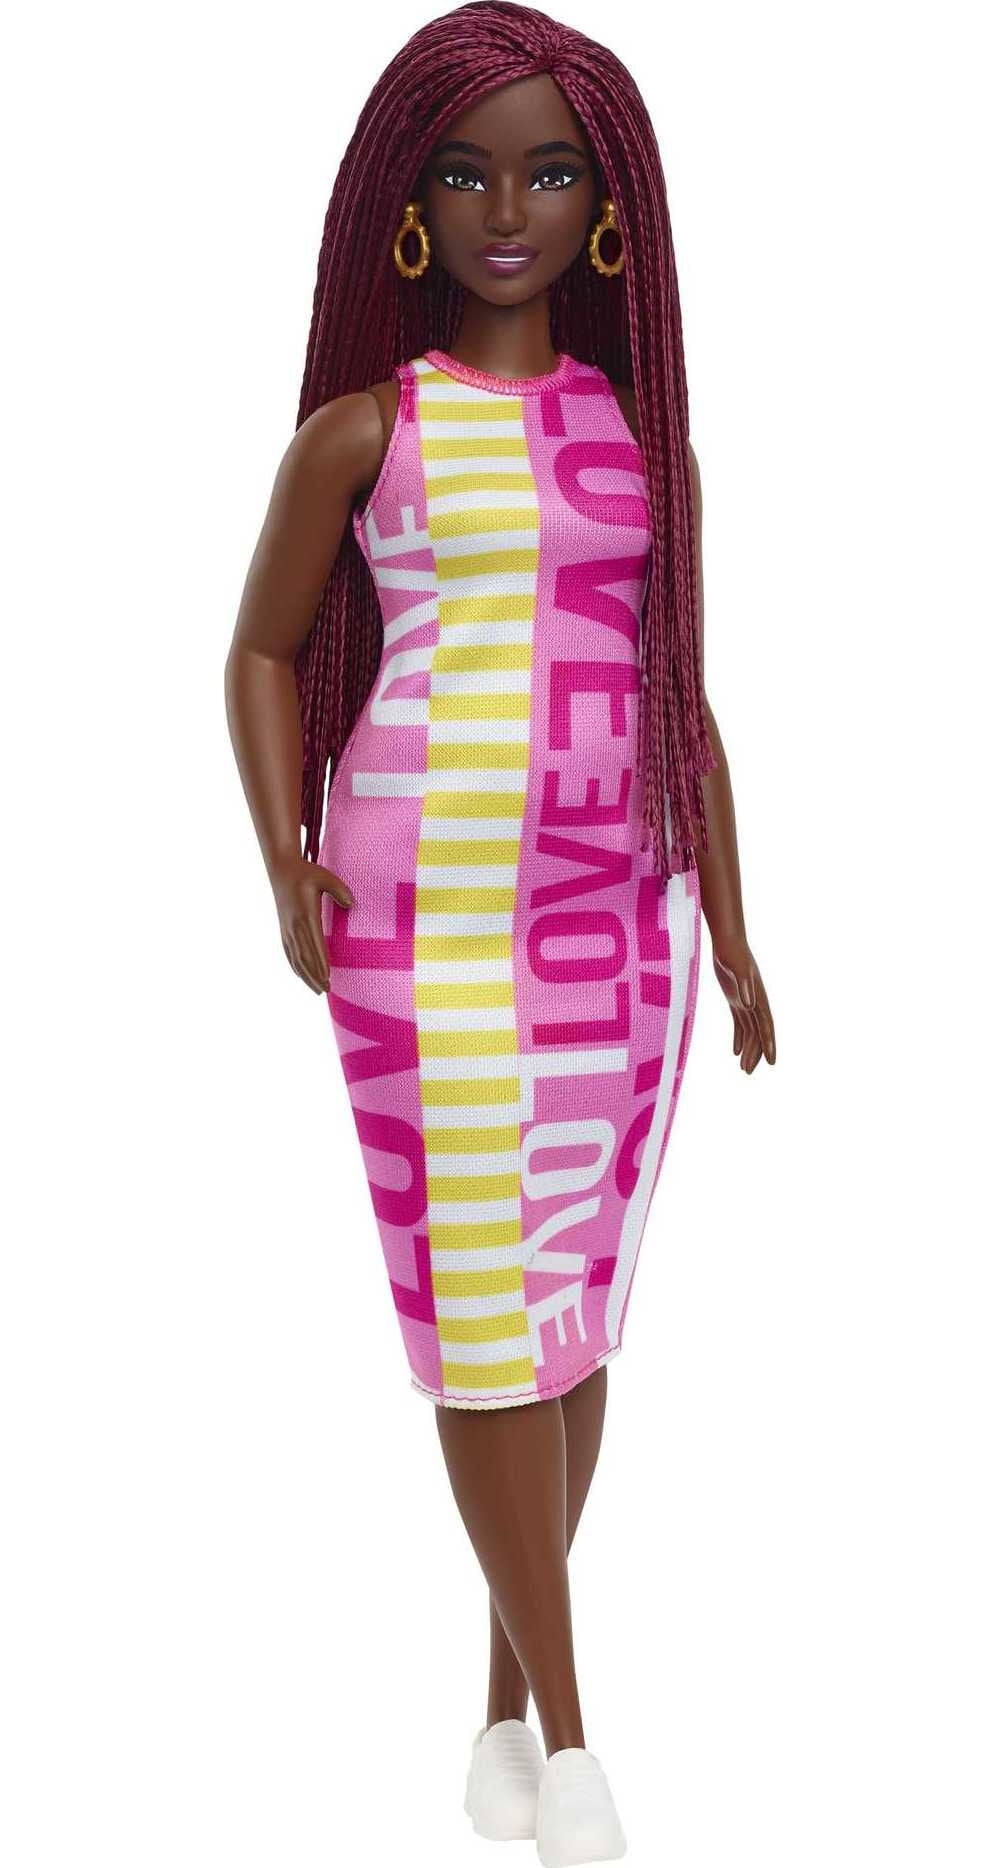 Barbie Fashionistas Doll #189 in Sleeveless Dress with Curvy Body